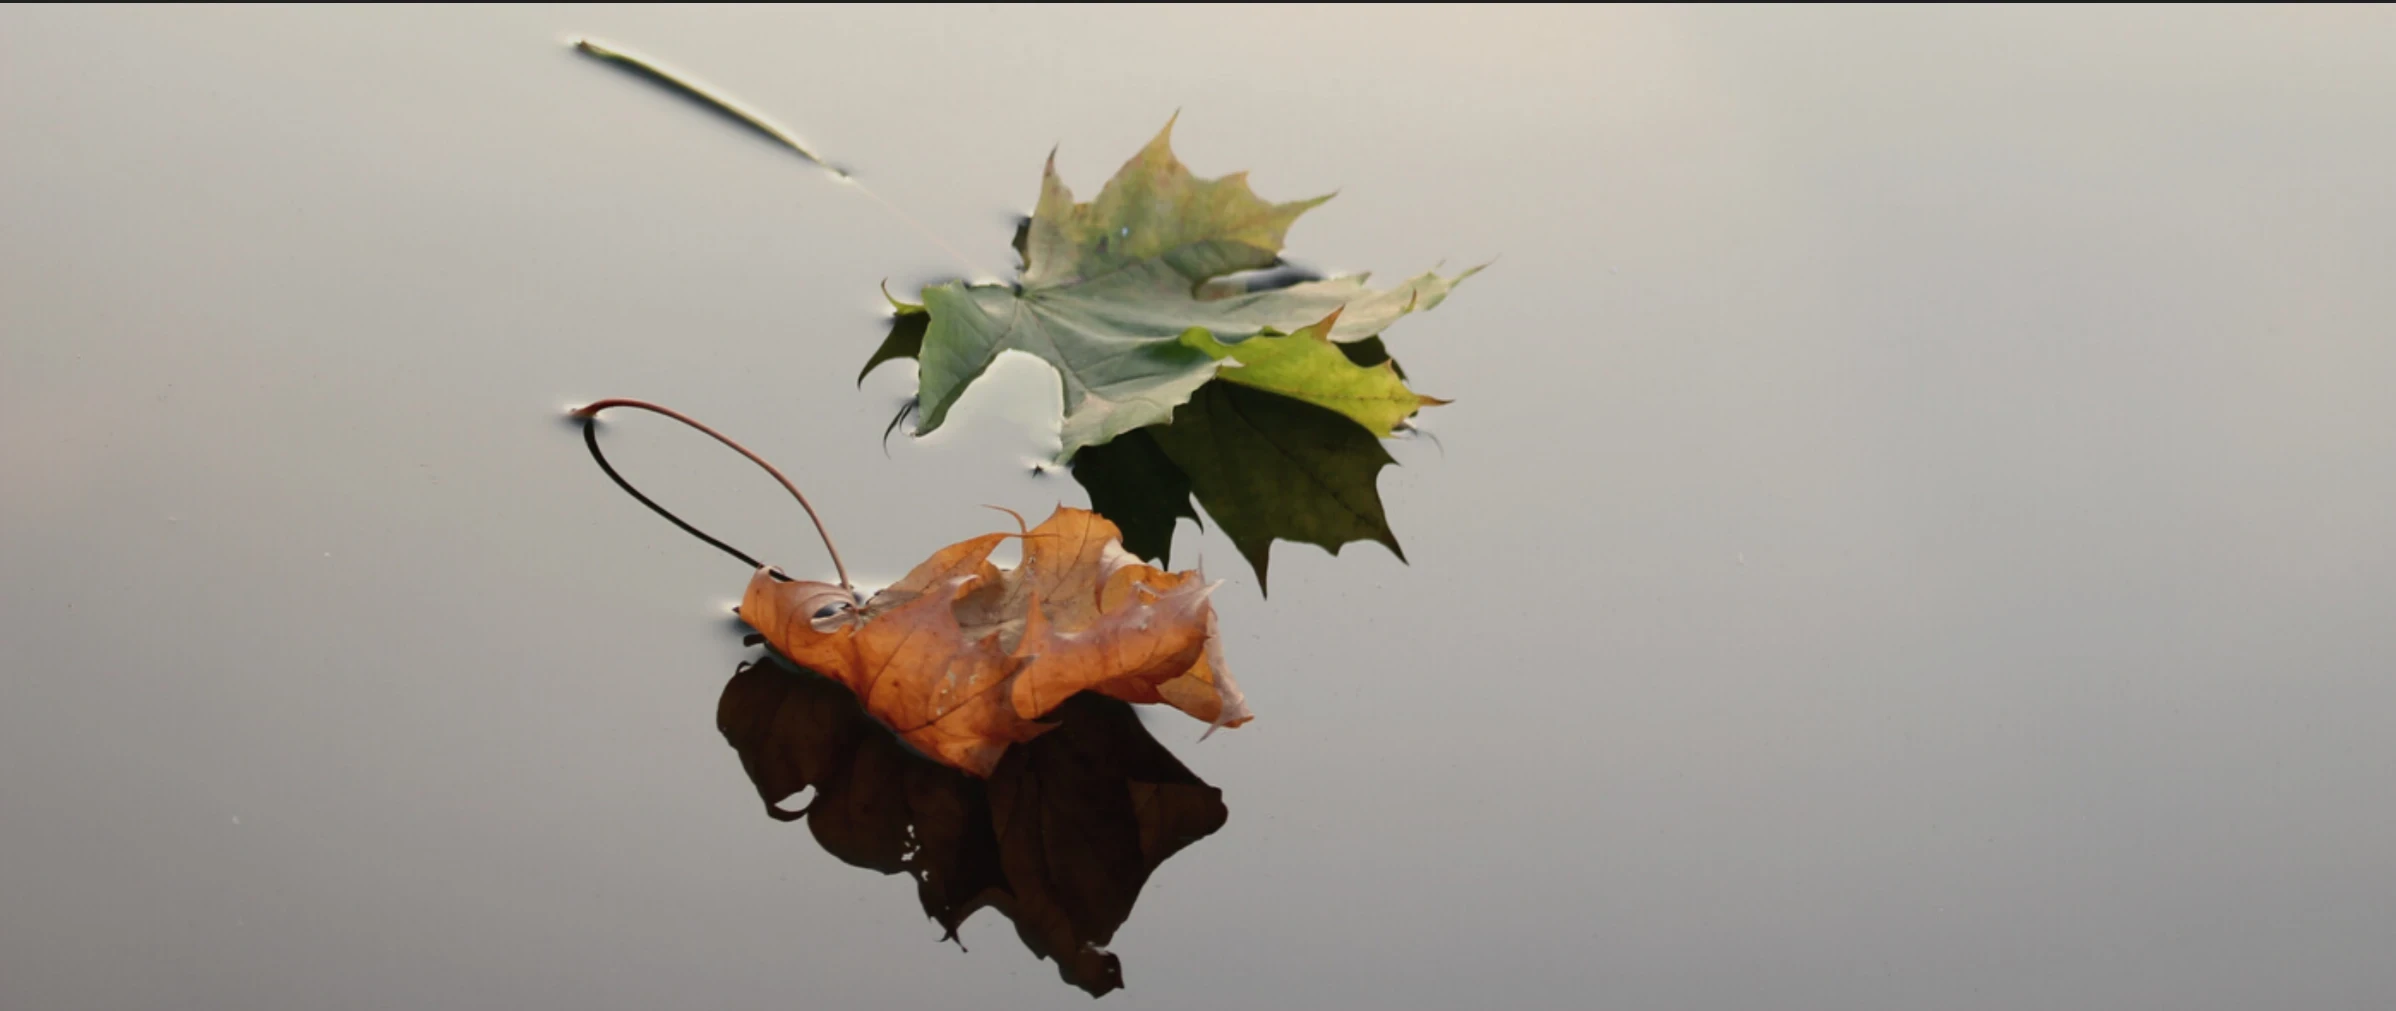 hojas flotando